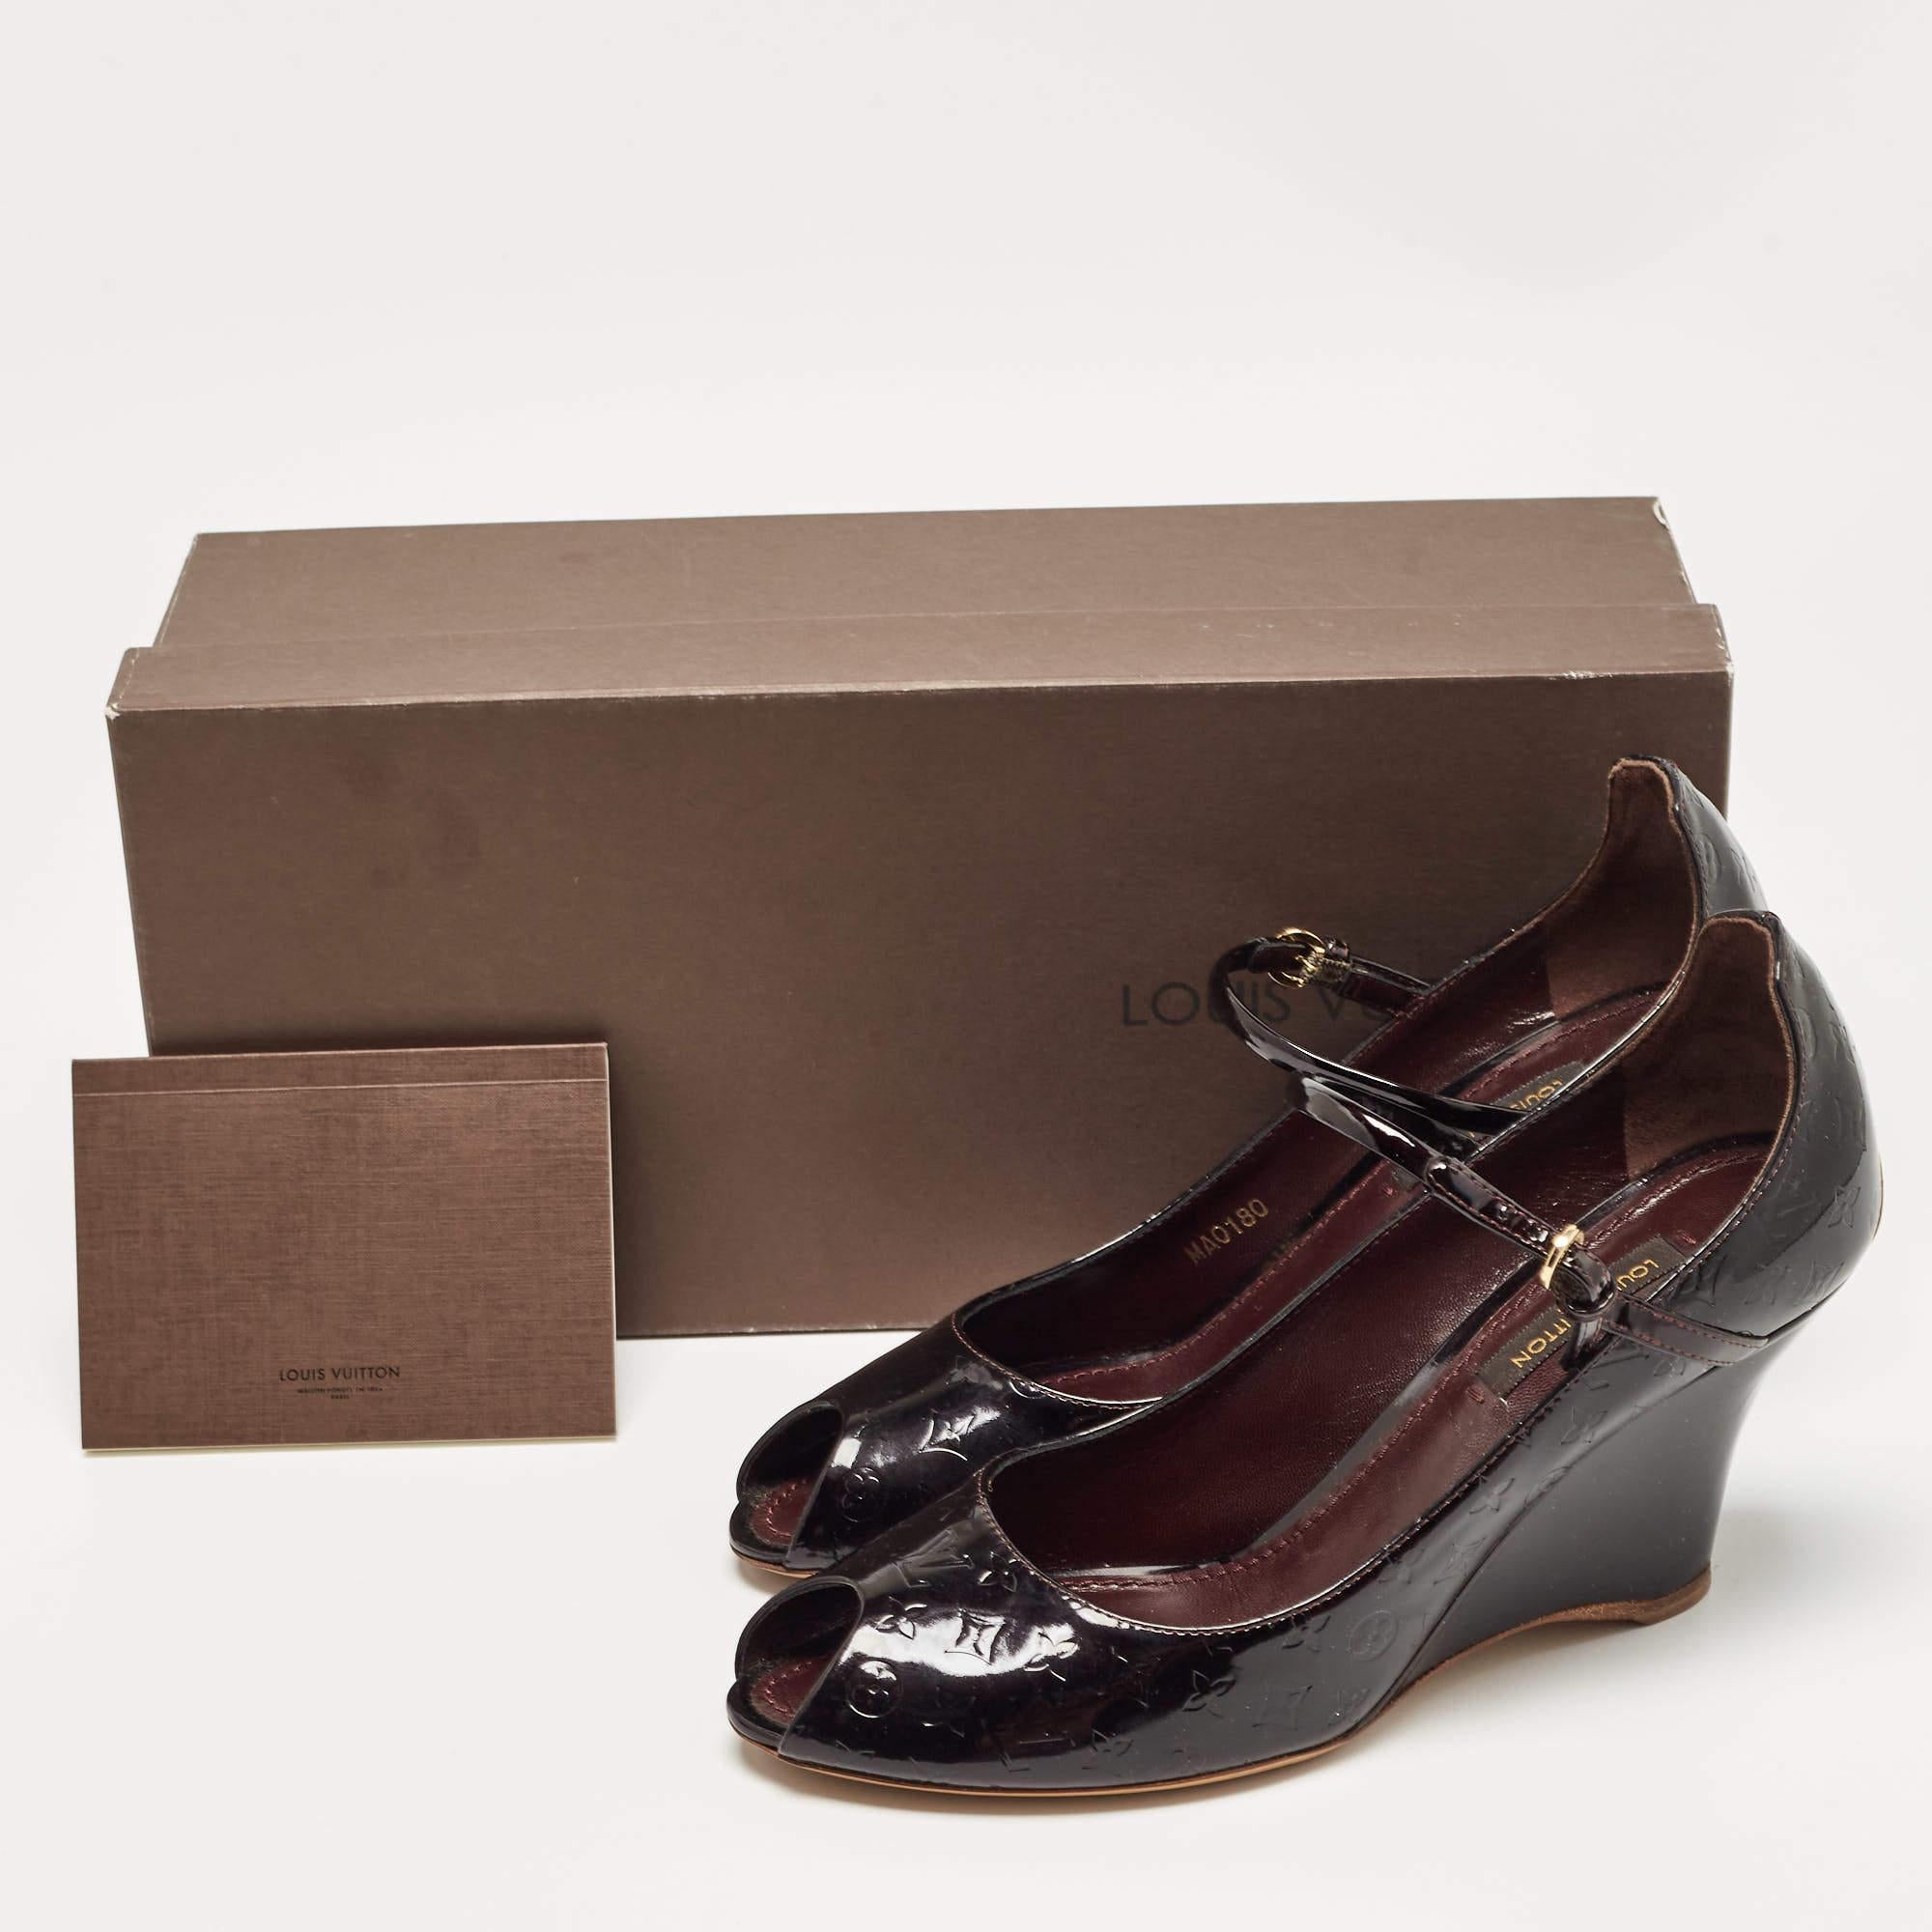 Louis Vuitton Plum Monogram Patent Leather Peep Toe Wedge Pumps Size 36.5 For Sale 4